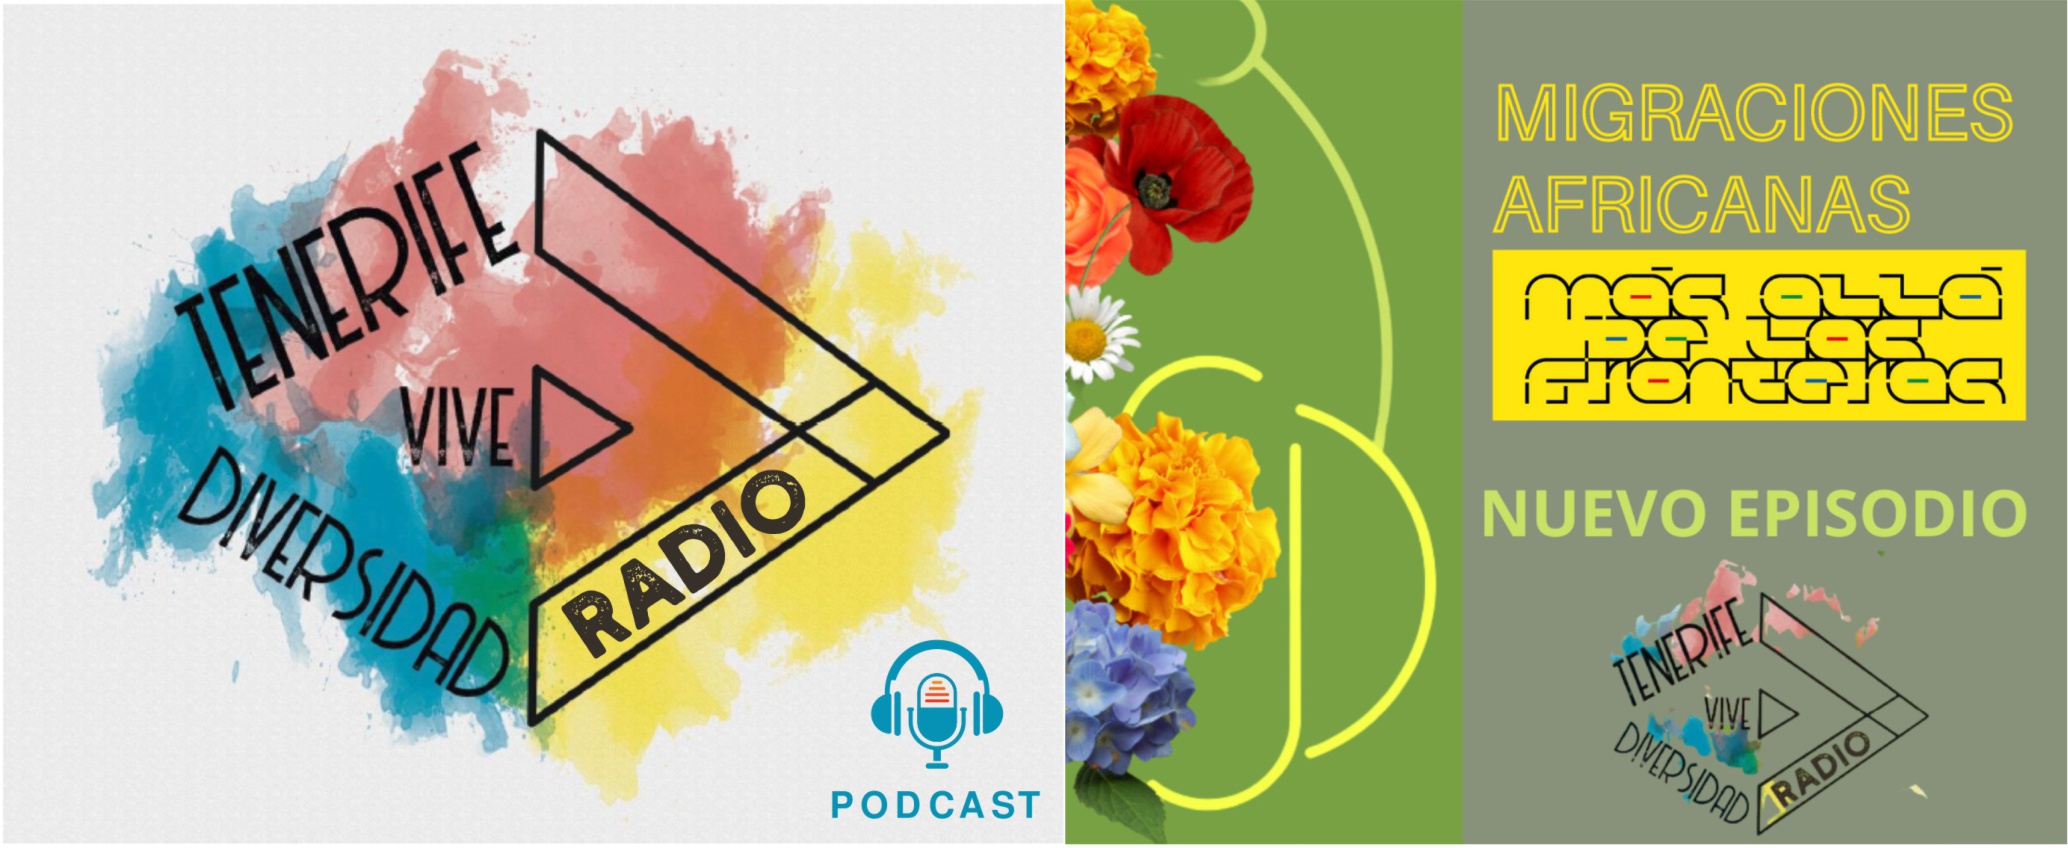 Tenerife vive Diversidad Radio